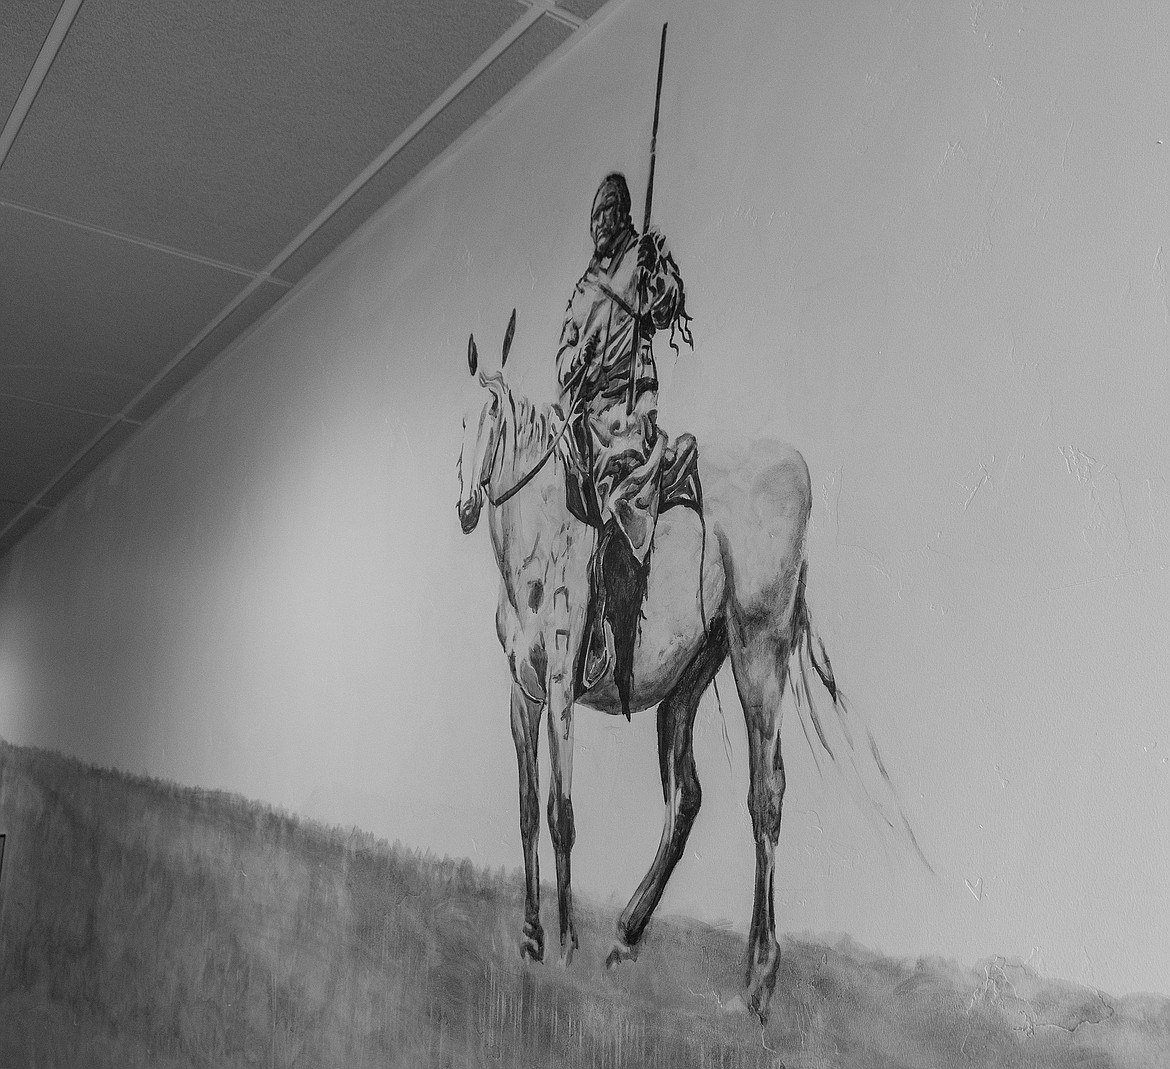 A Blackfeet hunter graces one of the hallways.